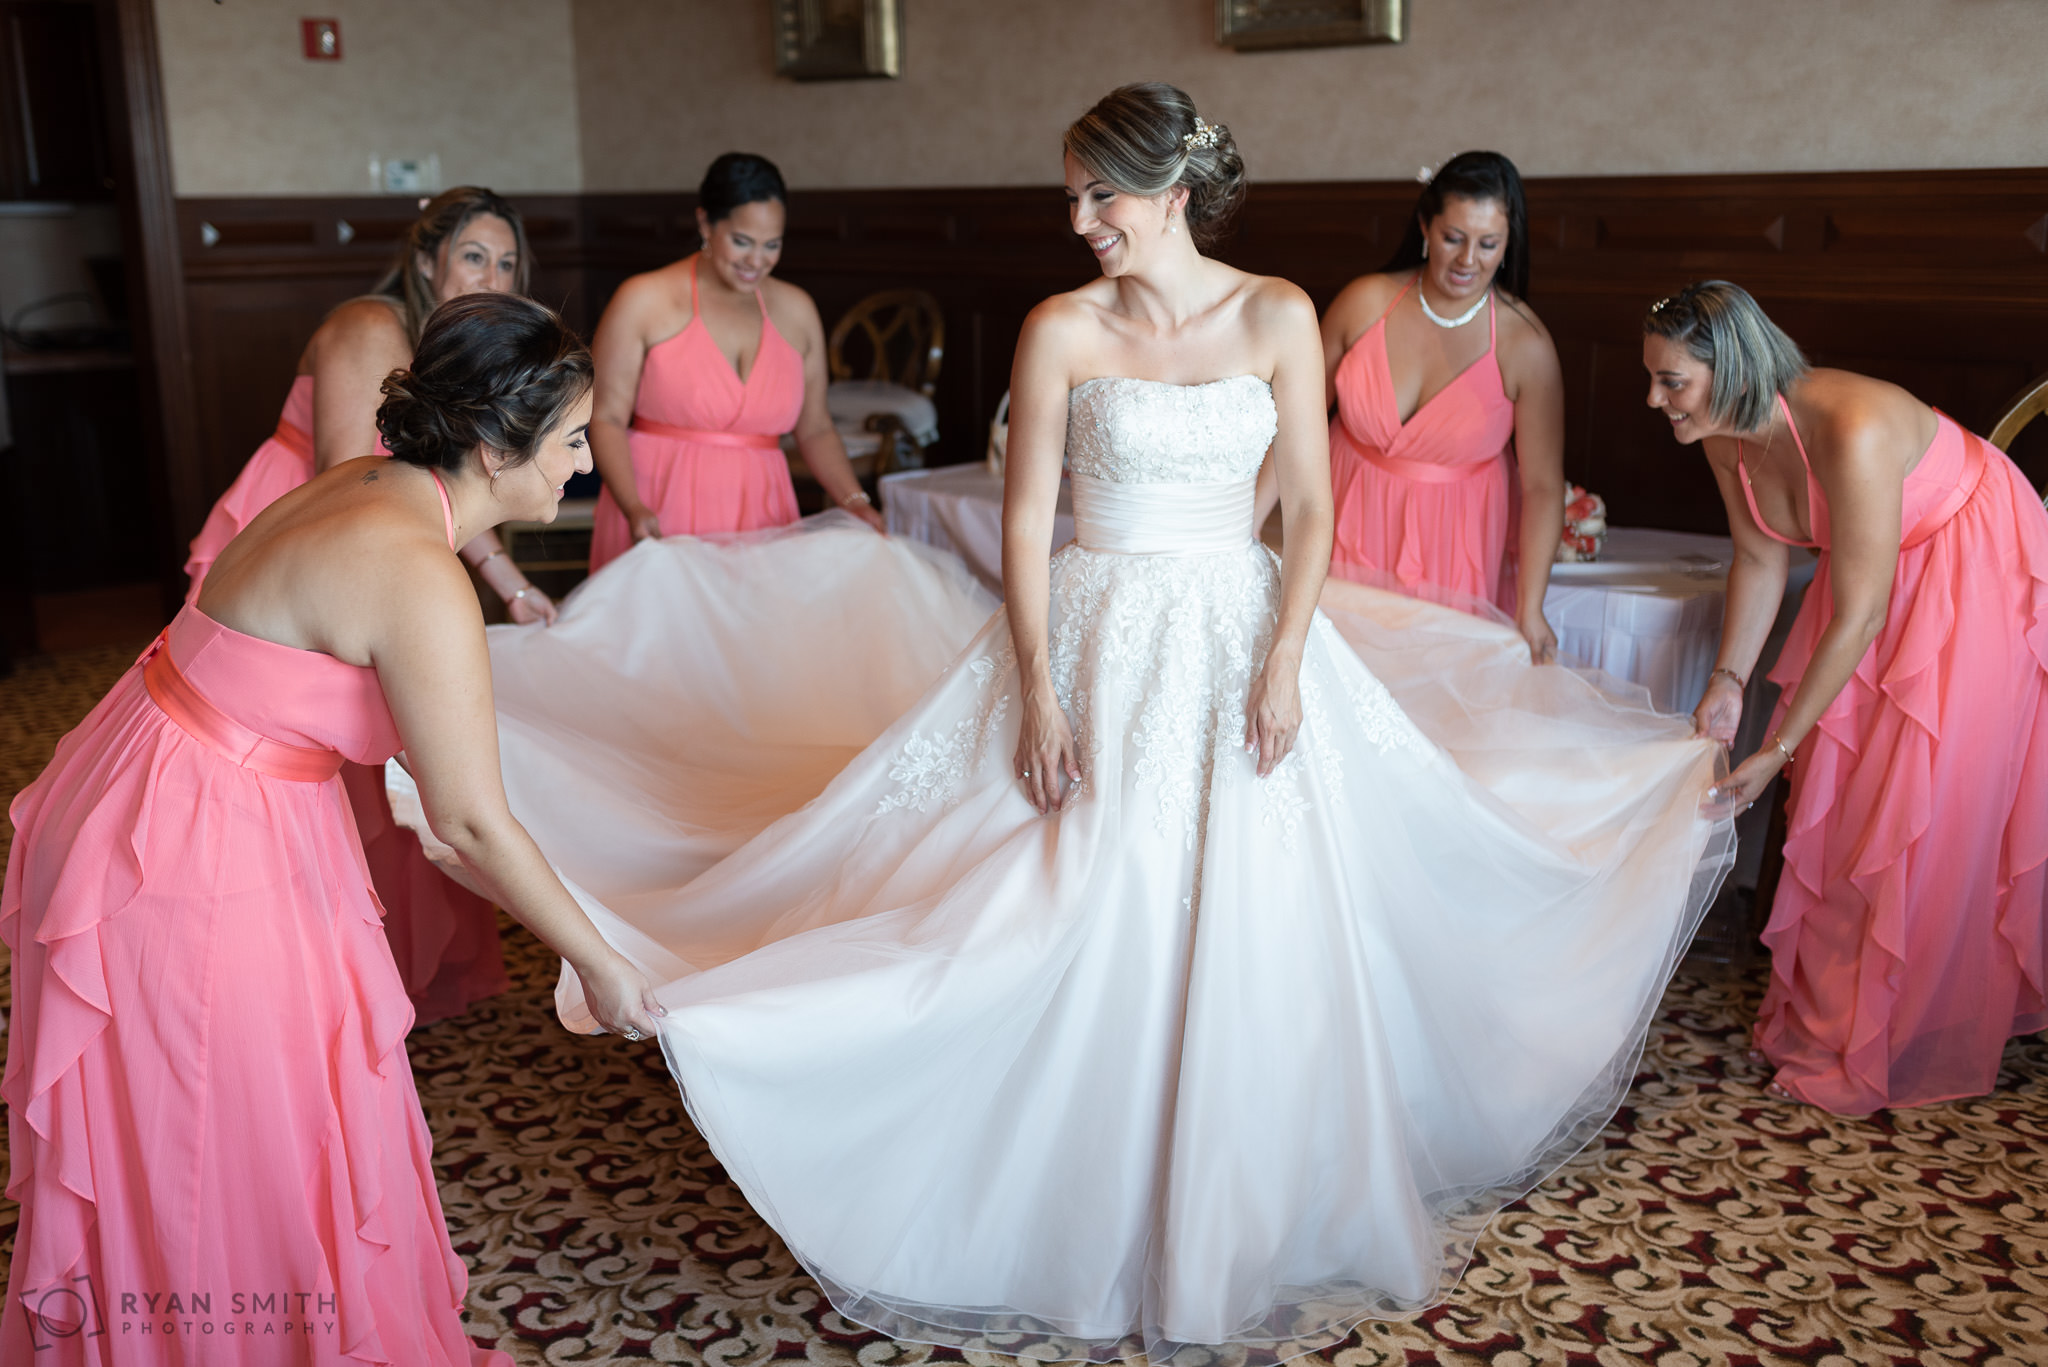 Bridesmaids fluffing  bride's dress before the wedding Grande Dunes Ocean Club